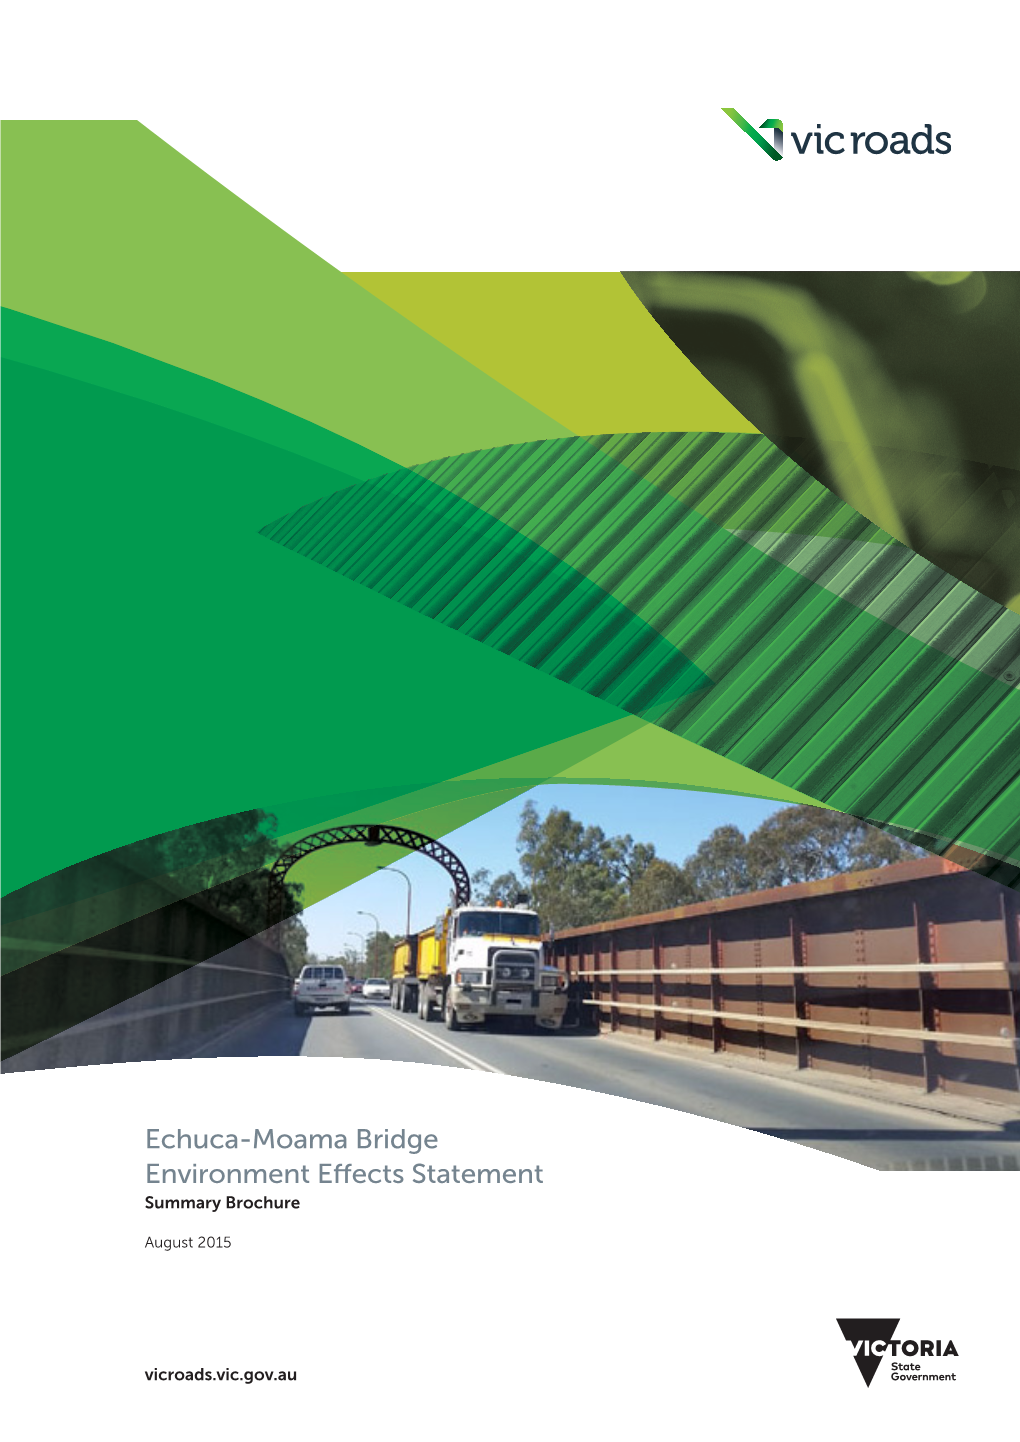 Echuca-Moama Bridge Environment Effects Statement Summary Brochure